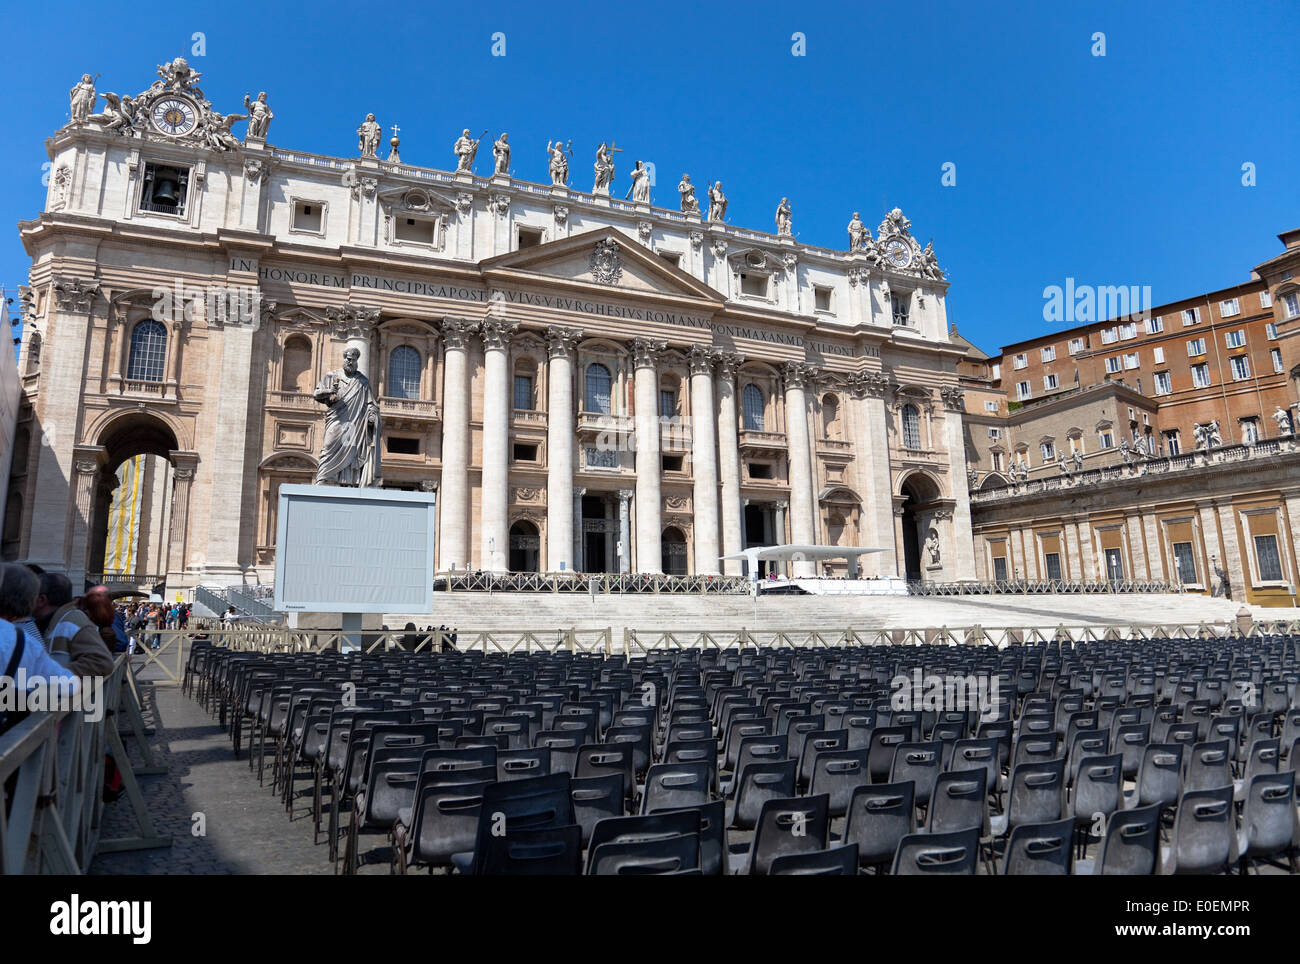 Sesselreihen auf dem Petersplatz, Vatikan - Line of chairs on the Peter's square, Vatican Stock Photo